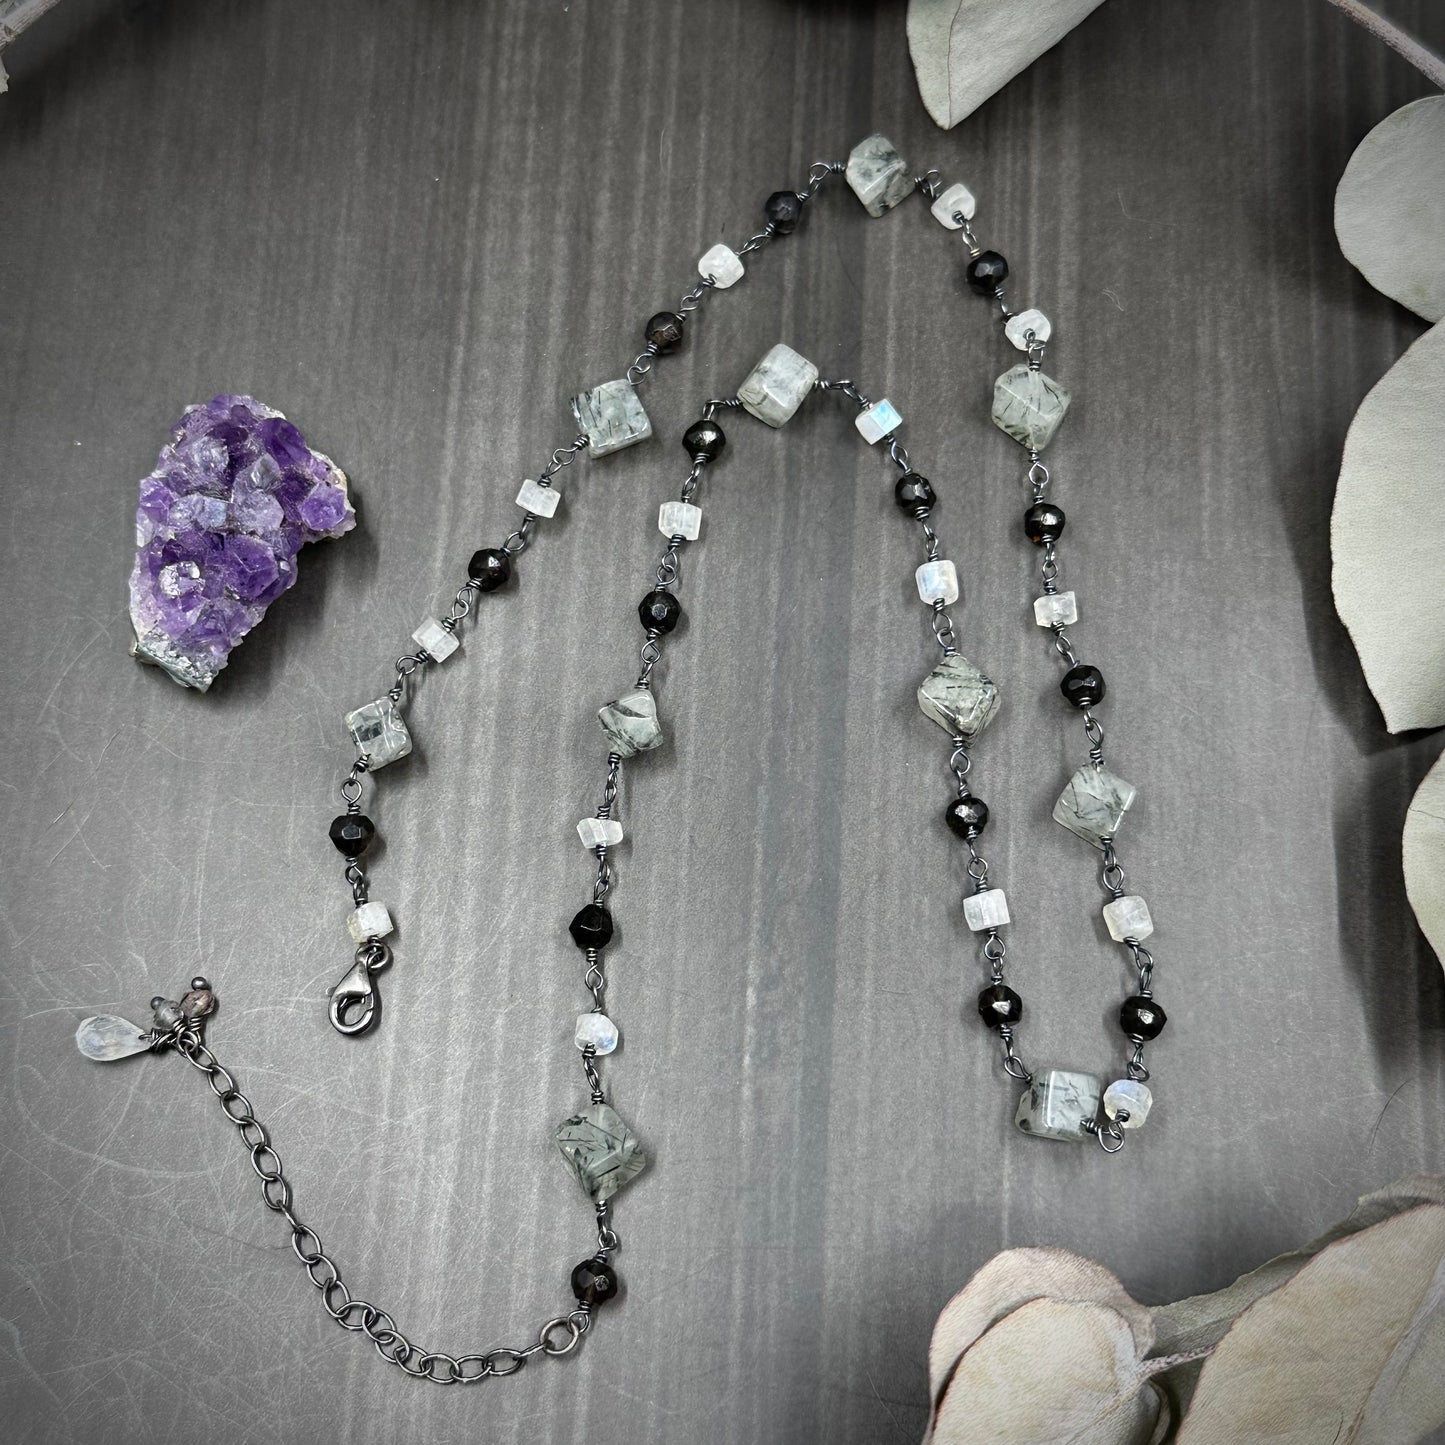 Tourmalinated quartz, smoky quartz, and rainbow moonstone sterling silver necklace